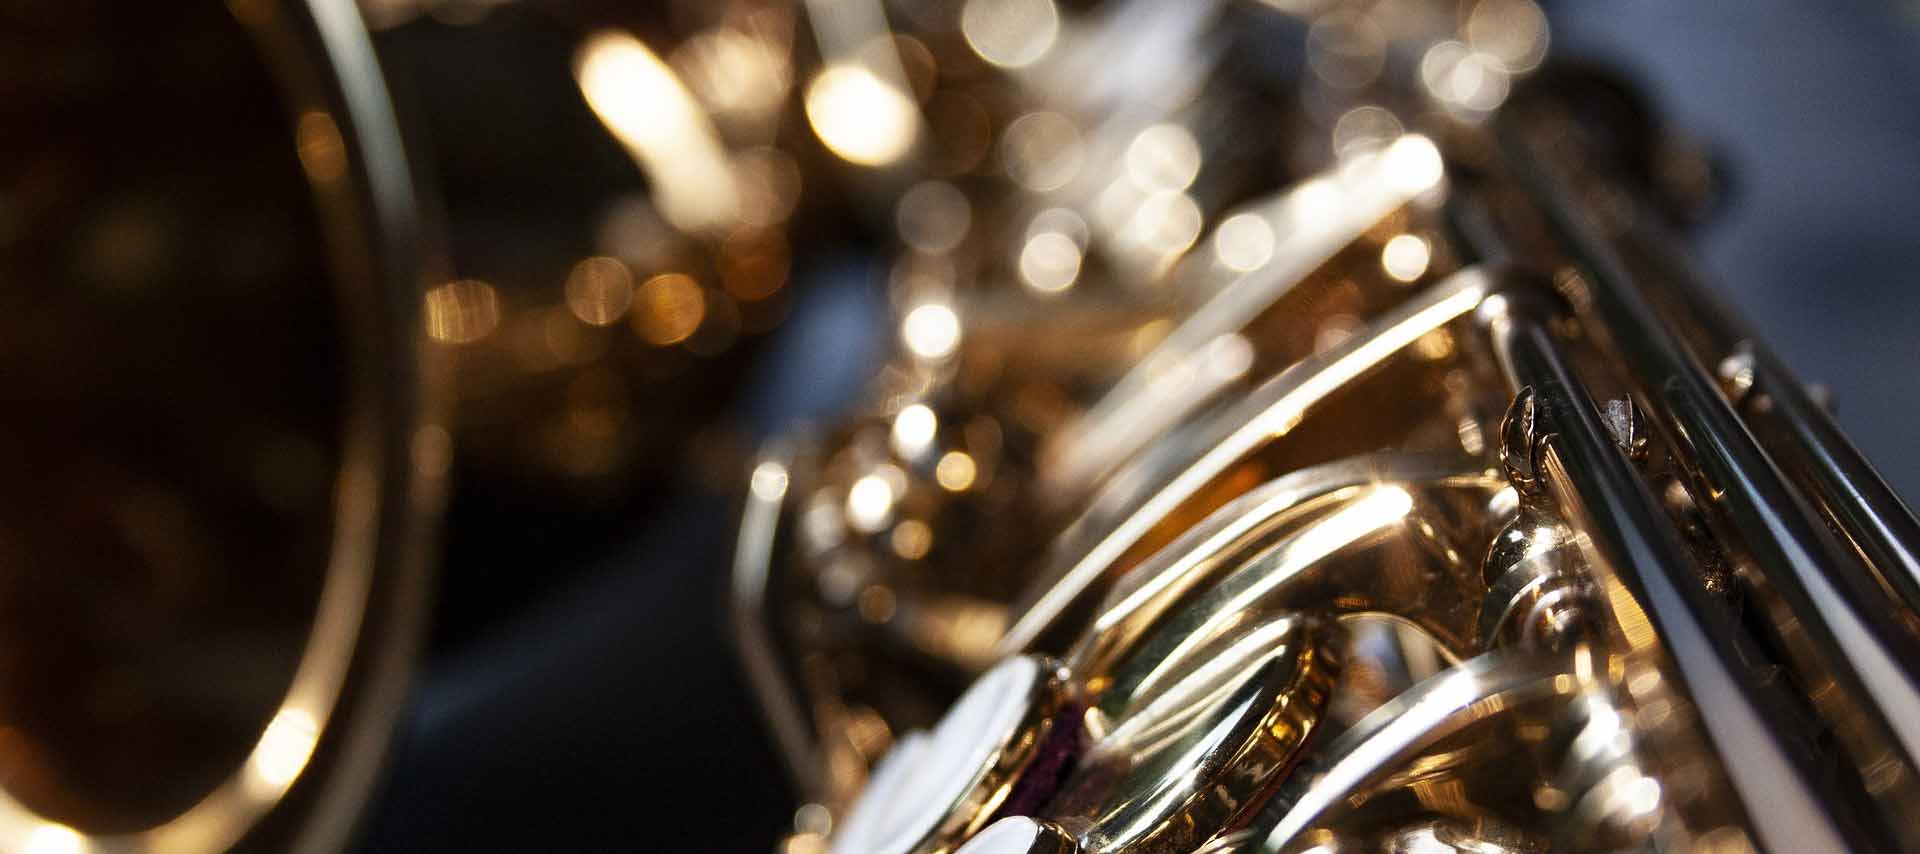 Blasorchesternoten Légère Blätter für Saxophon - Kunststoff oder Holz?